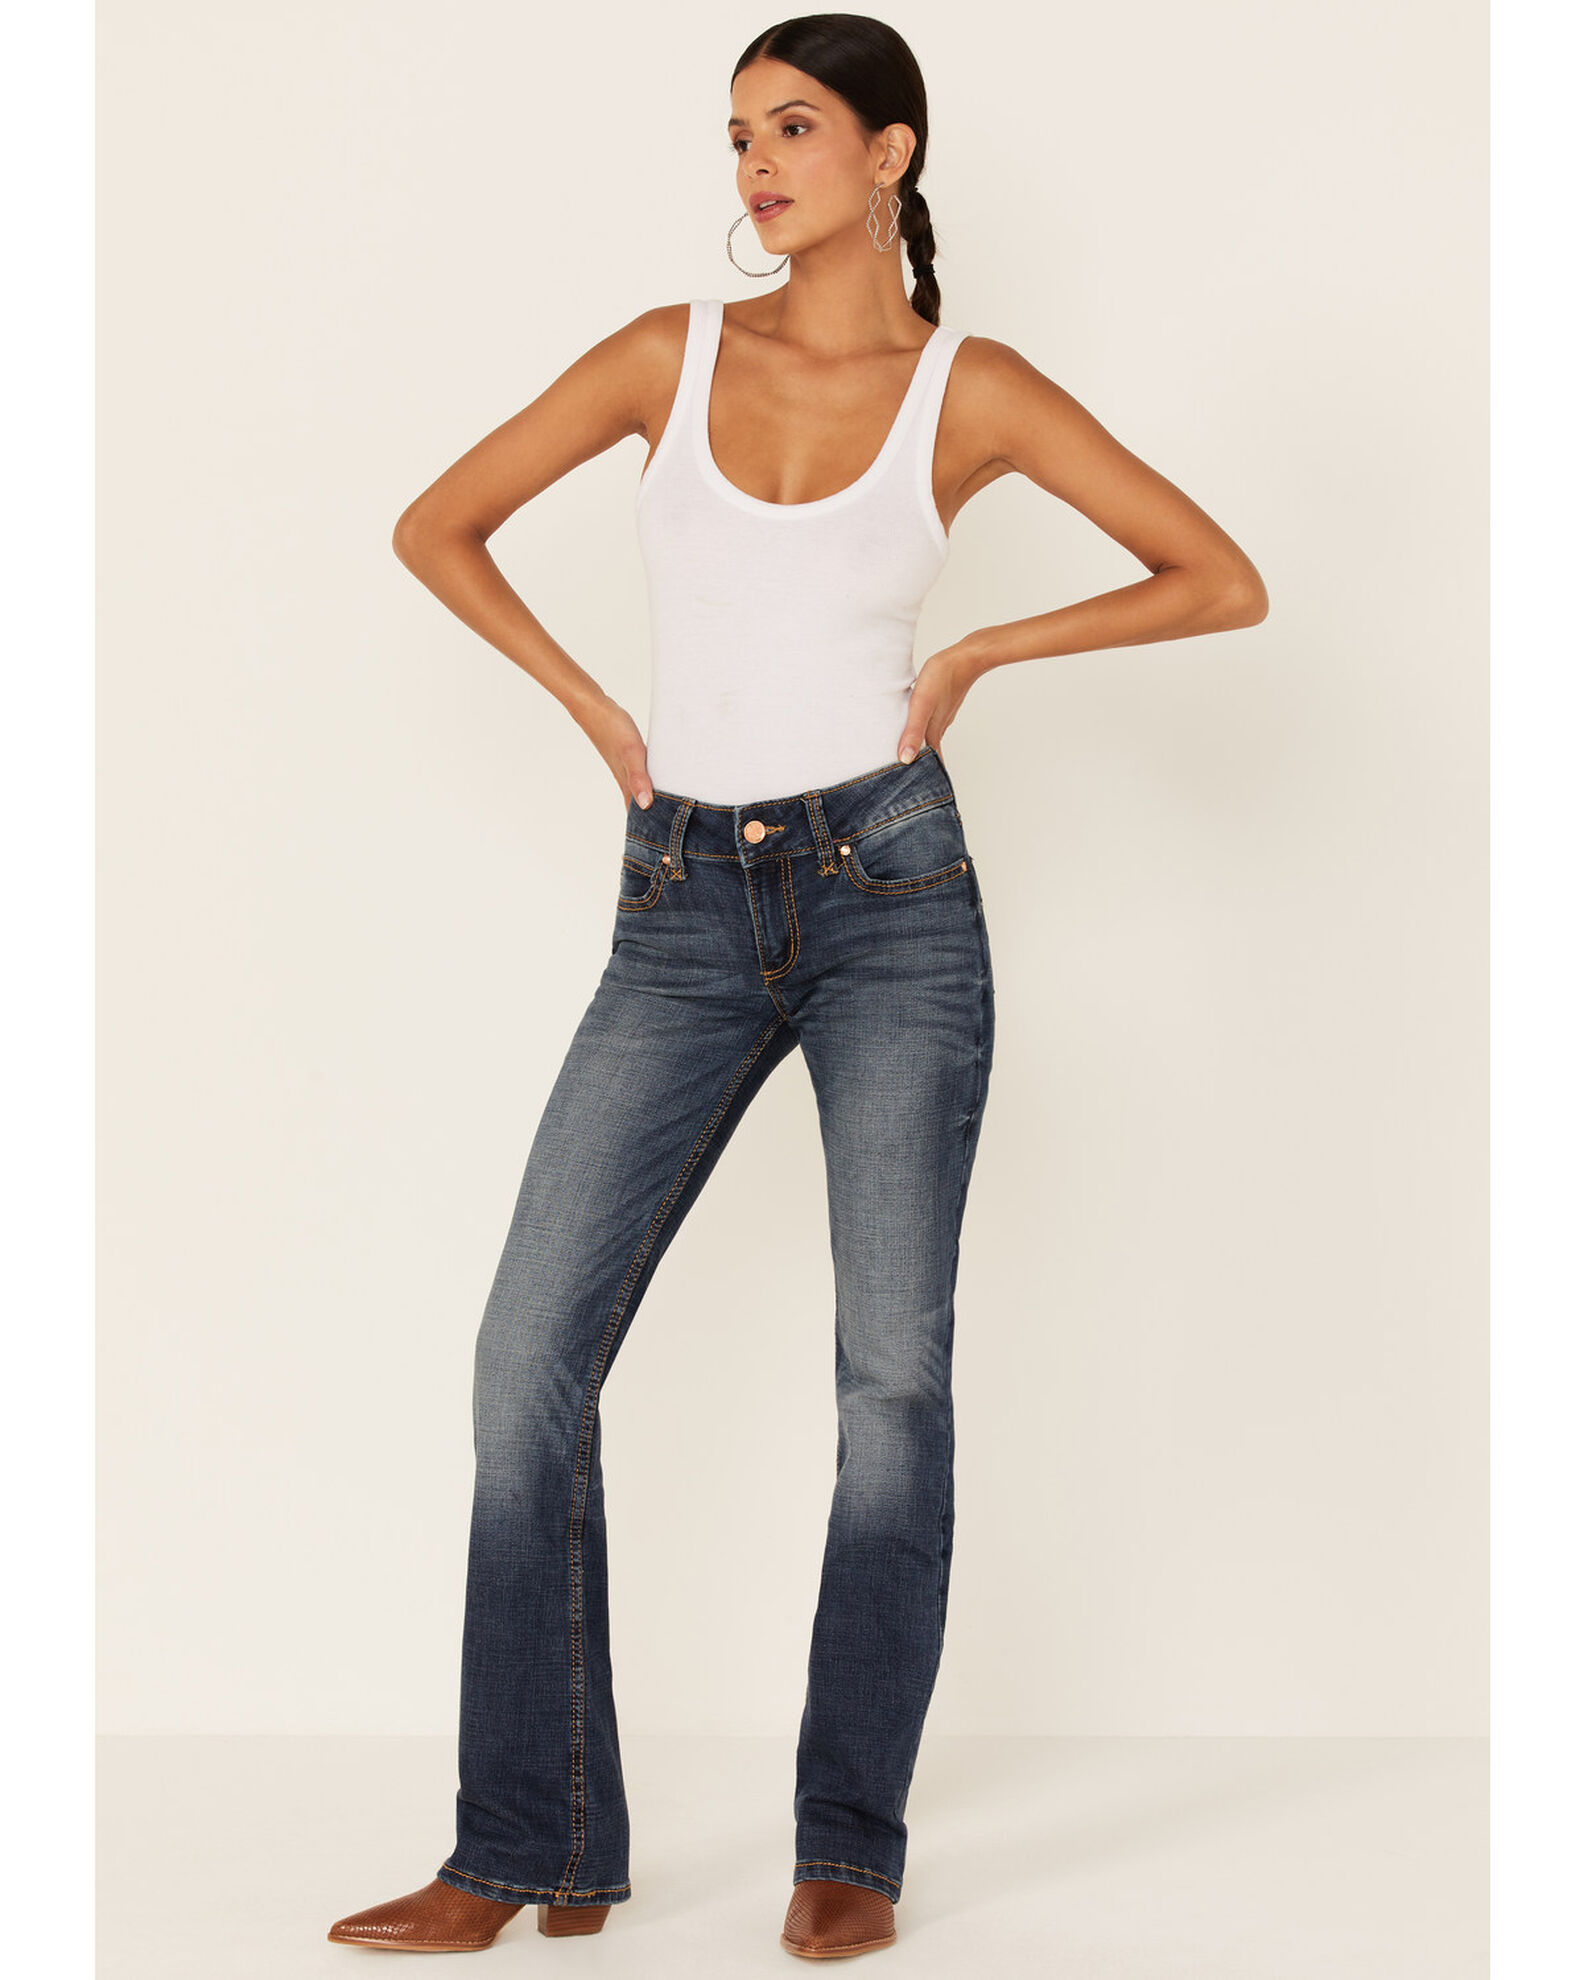 Wrangler Women's Premium Patch Cut Jeans | Boot